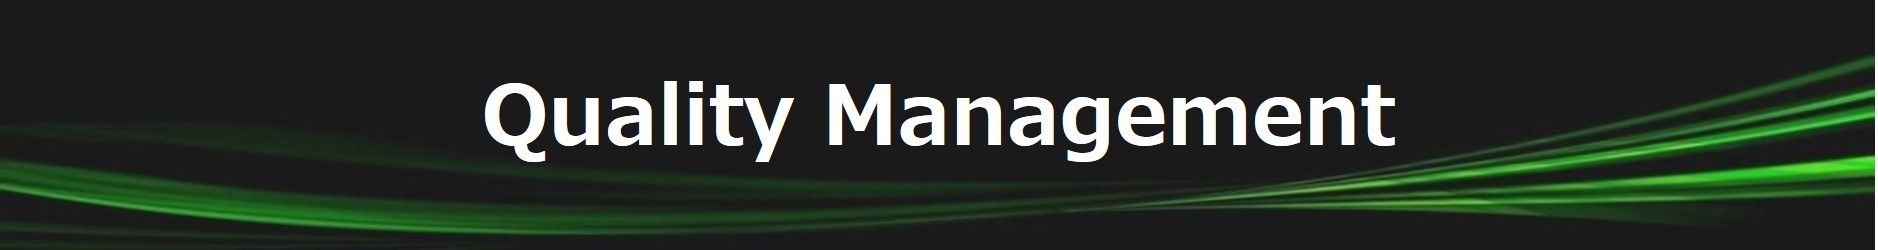 title-quality management